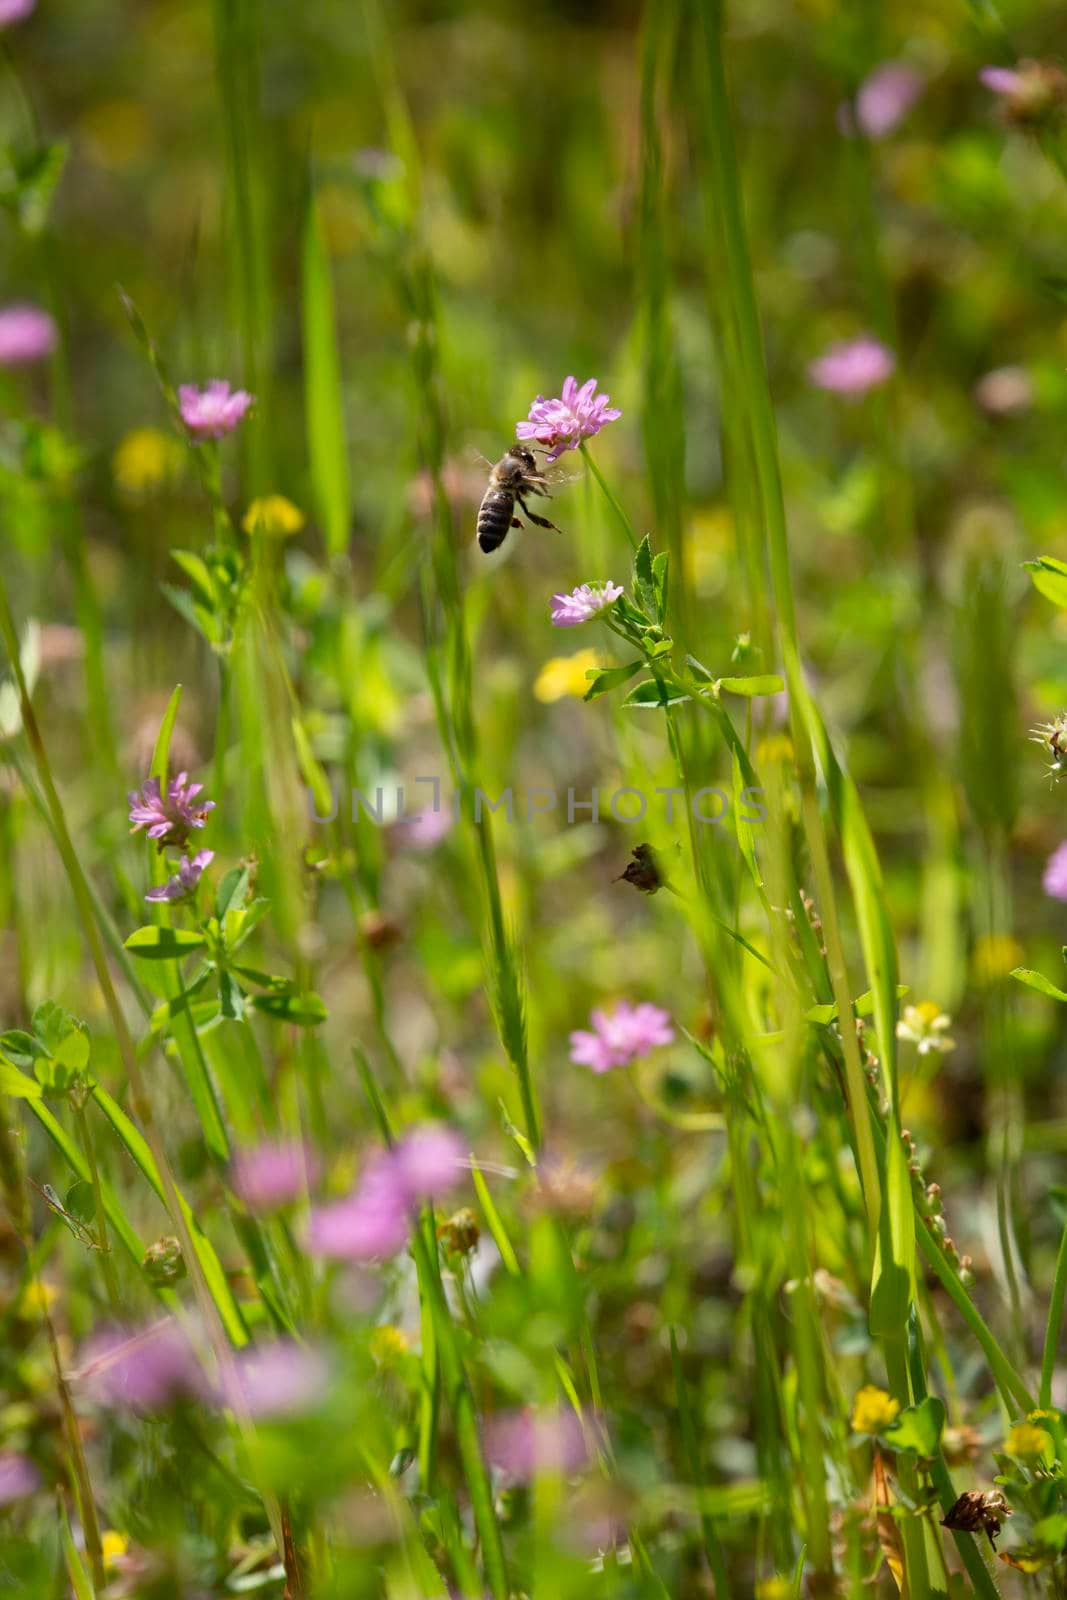 Honeybee Pollinating a Wildflower by tornado98